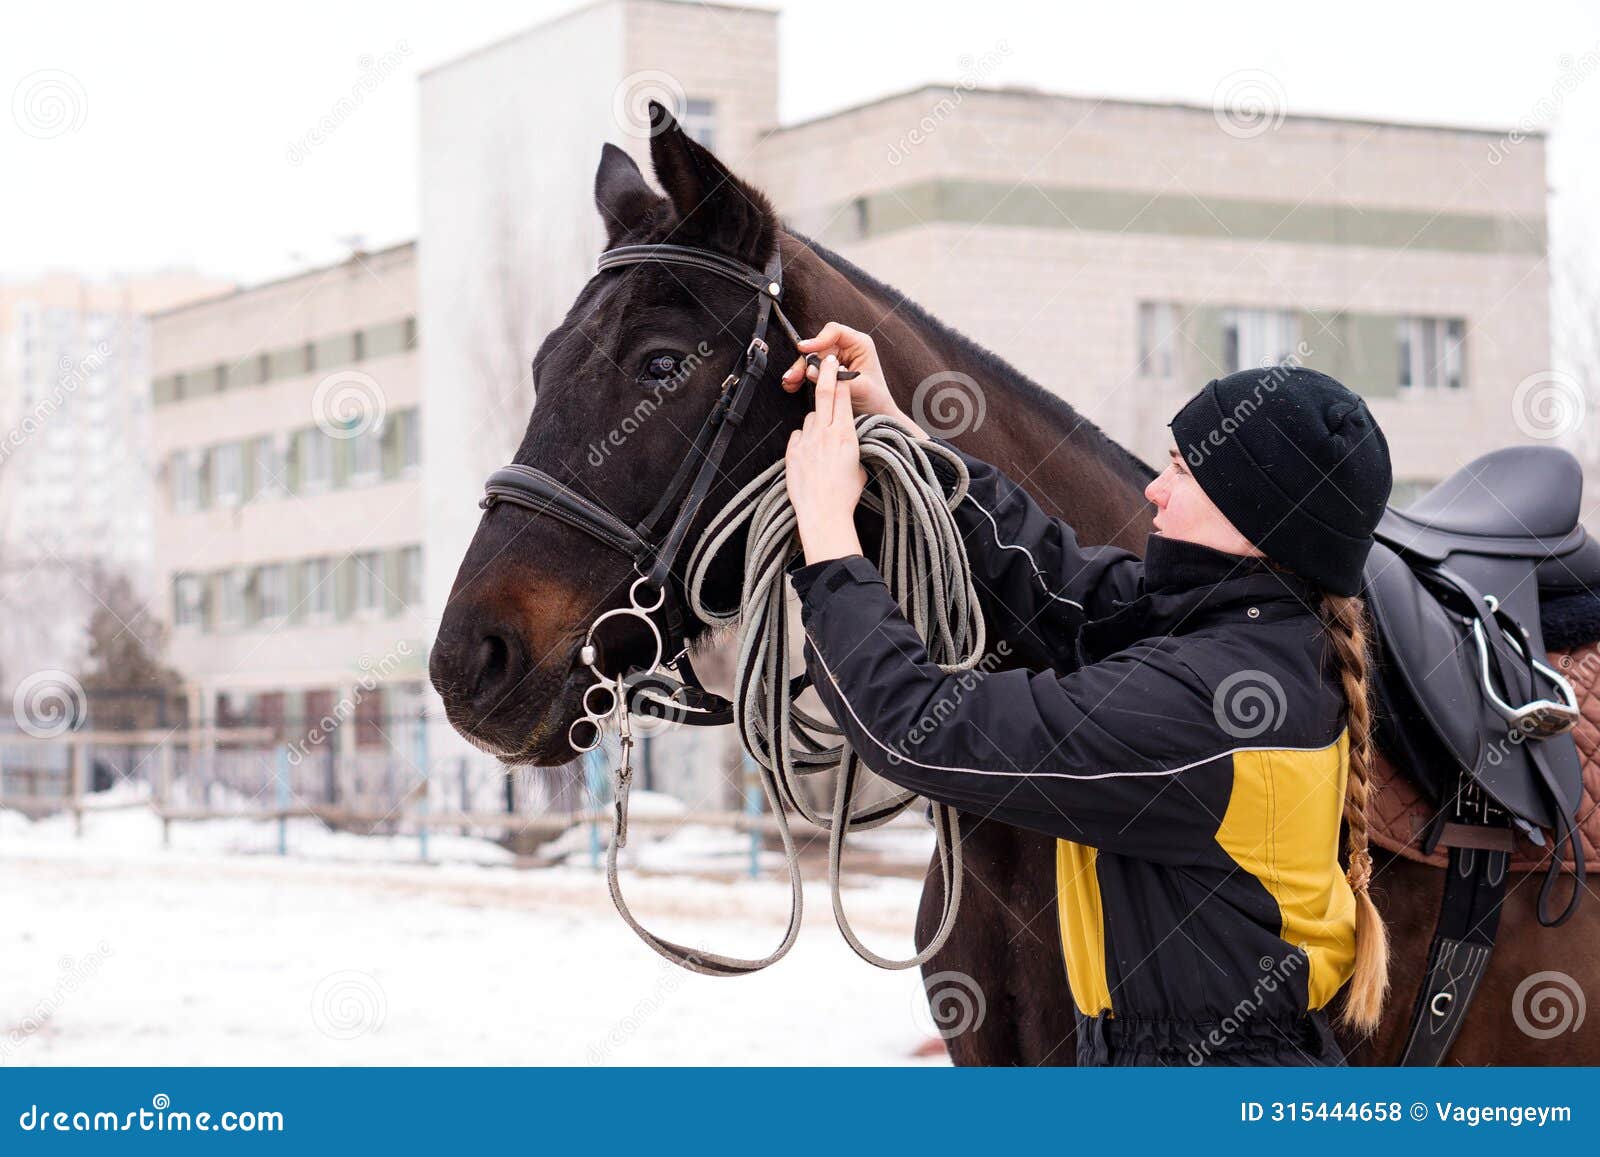 person adjusting reins on saddled horse outdoors